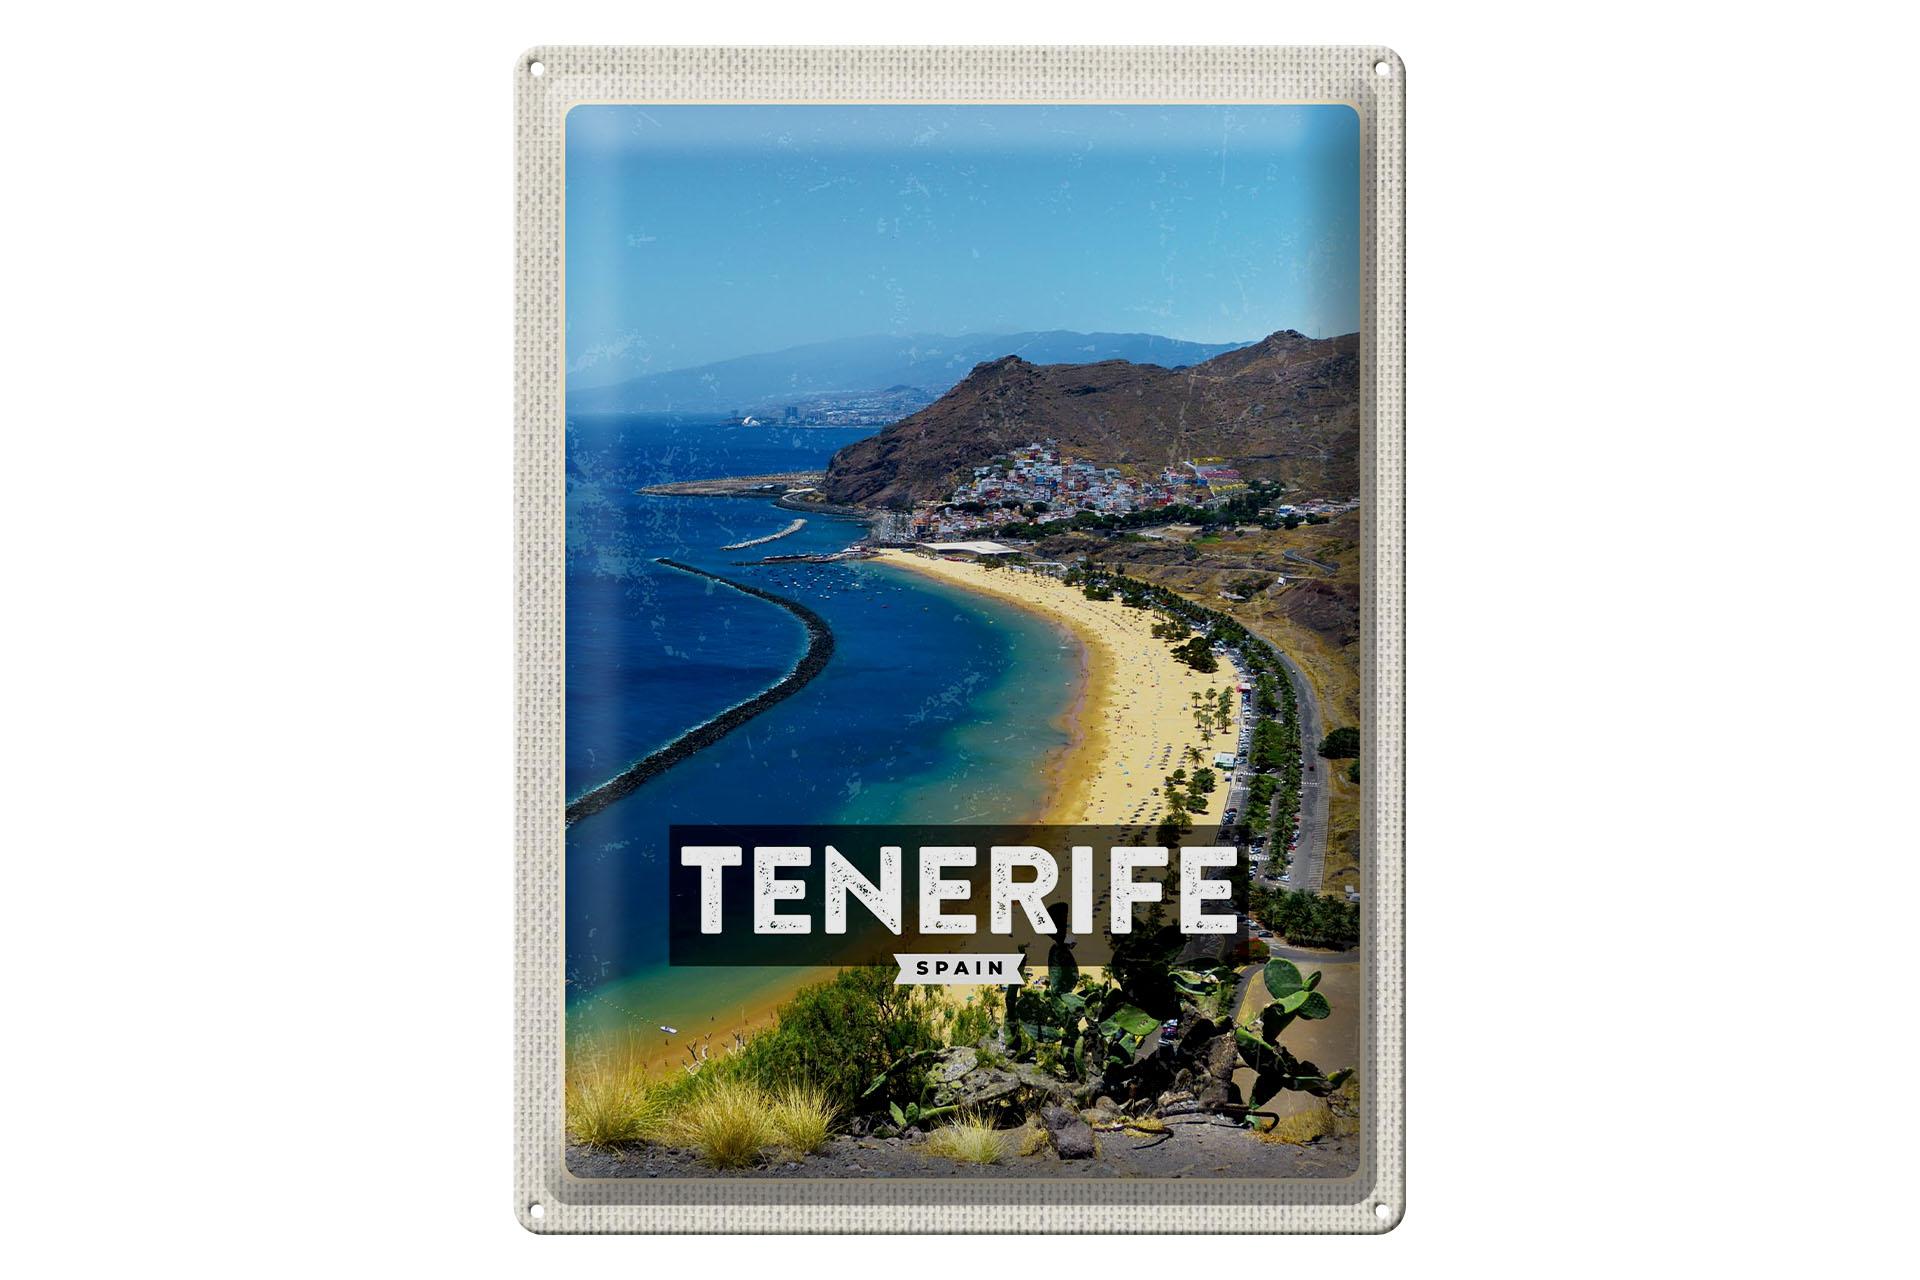 Blechschild Reise 30x40 cm Tenerife Spain Panorama Bild Deko Meer